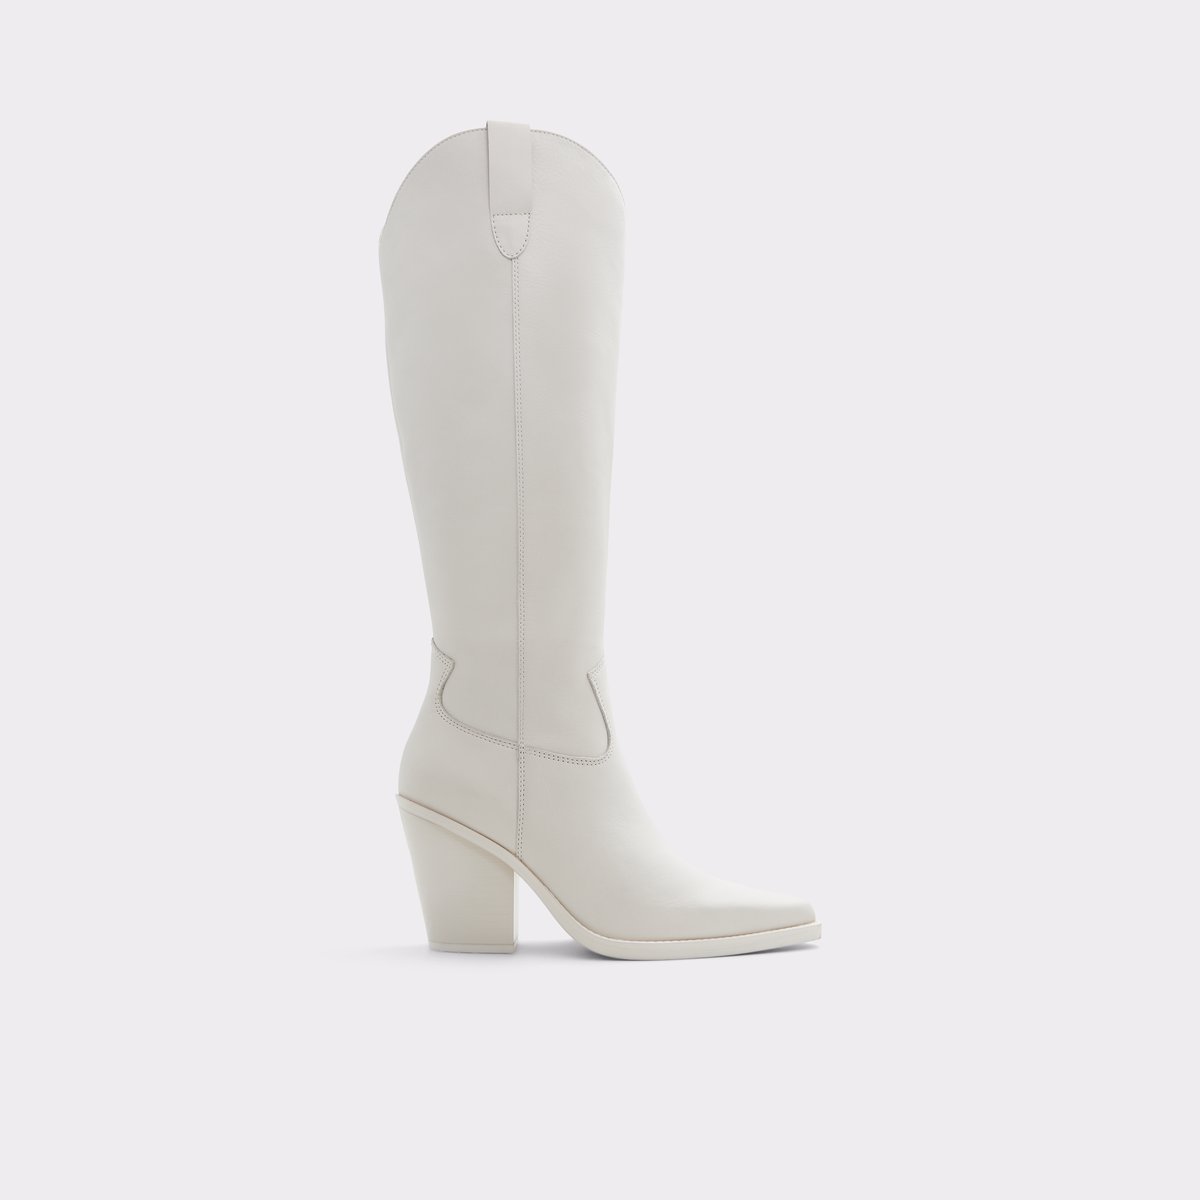 Nevada White Women's Tall Boots